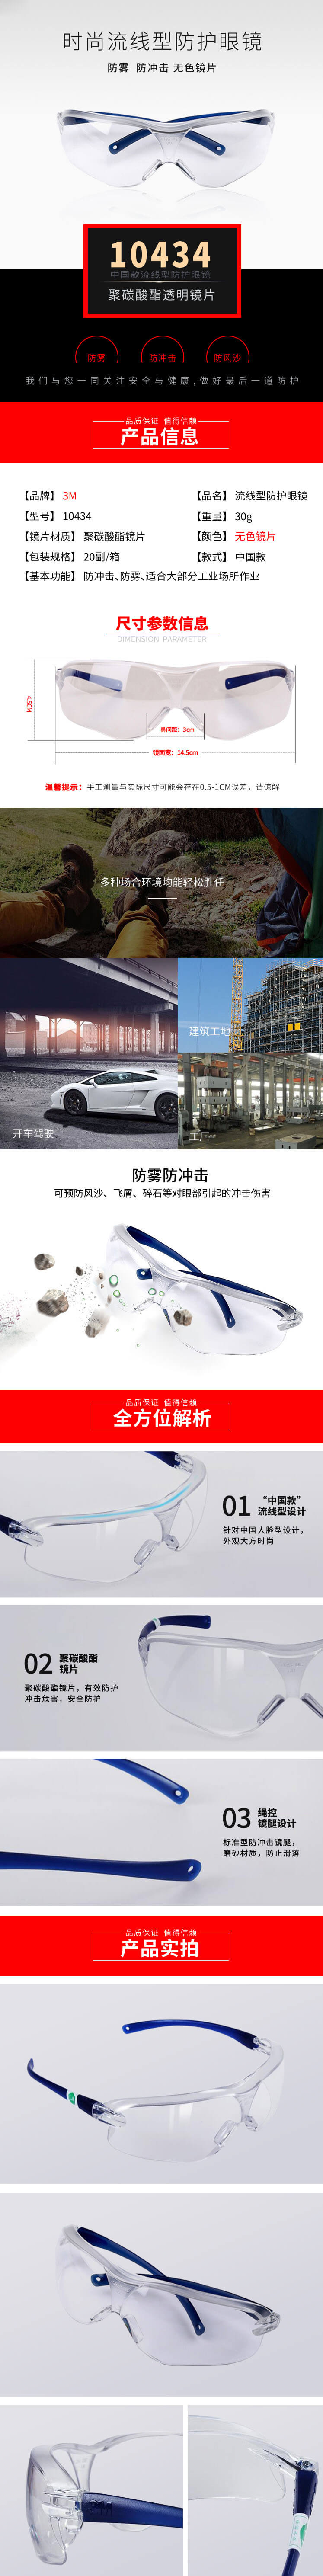 3M  中国款流线型防护眼镜 10434